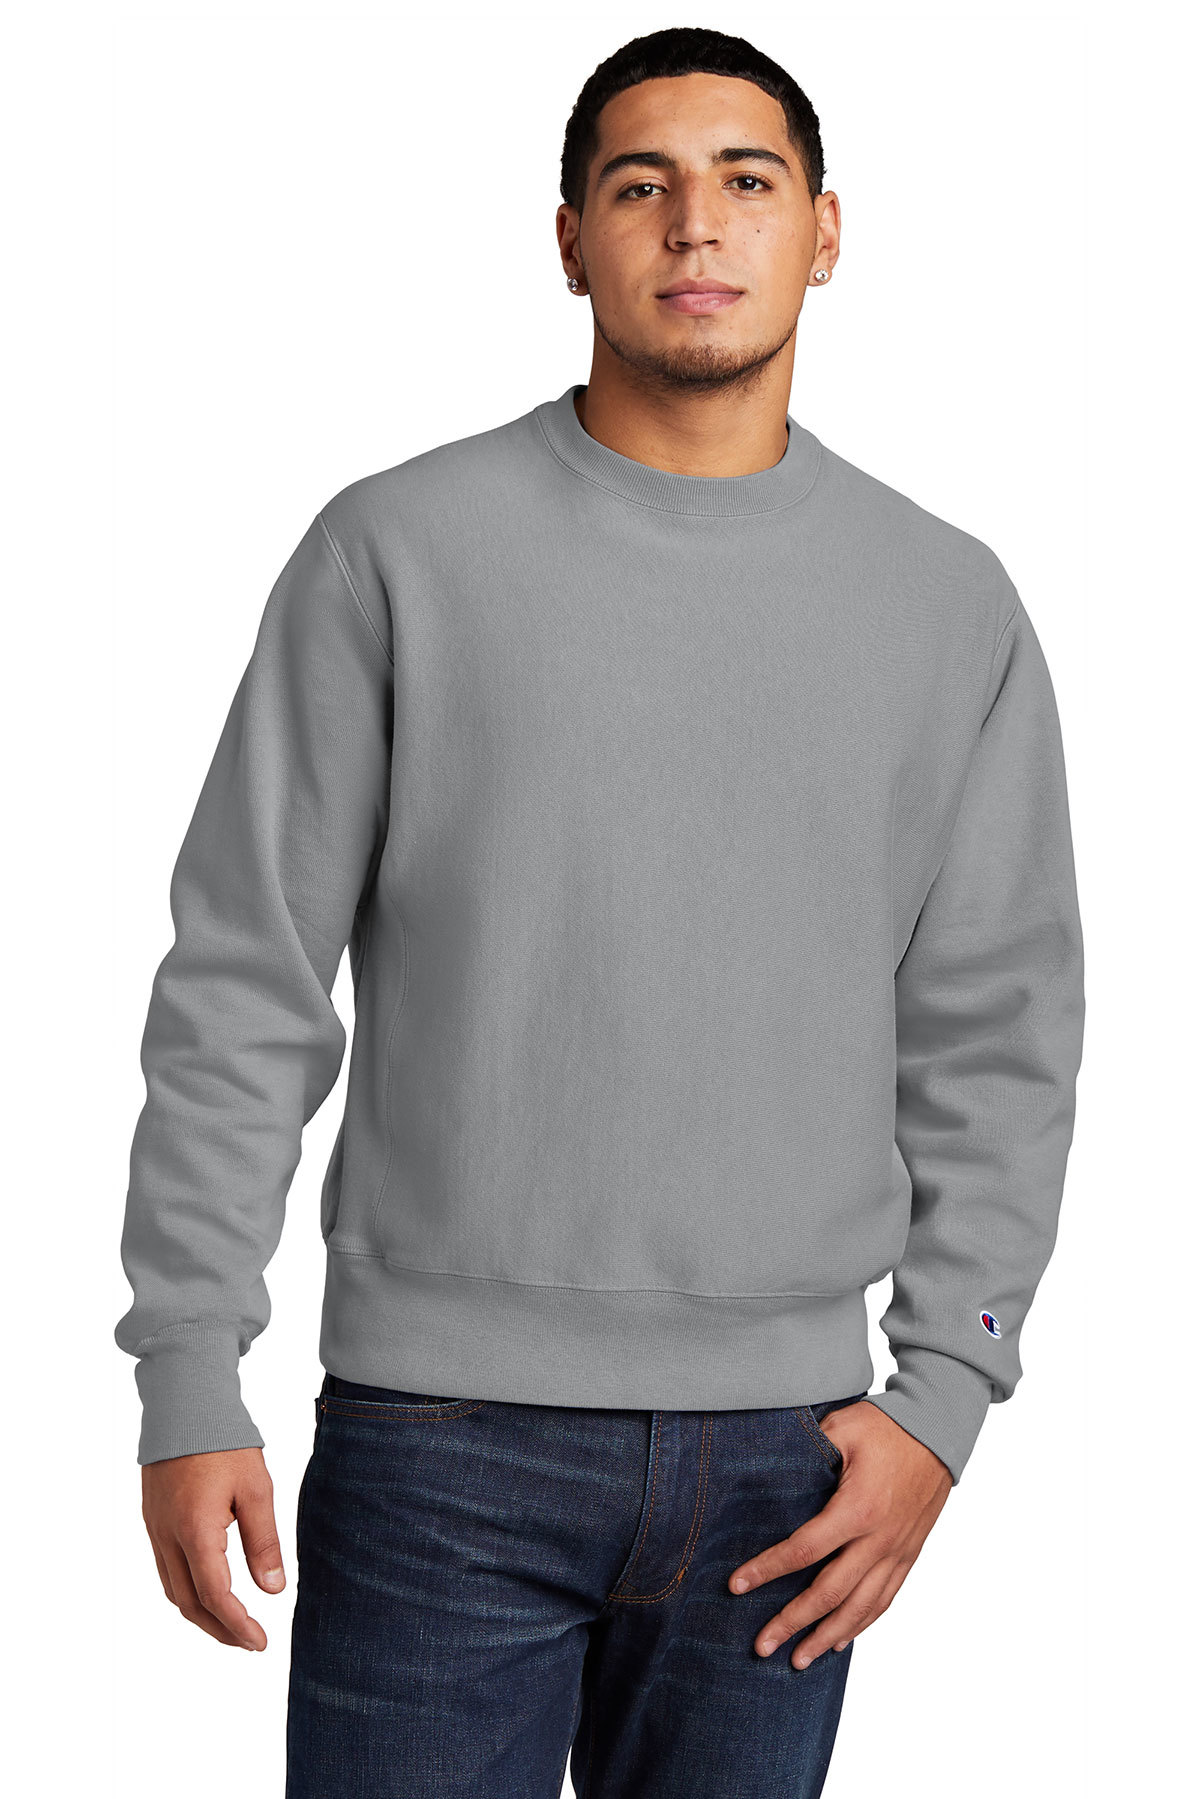 Champion GDS14 - Reverse Weave Garment Dyed Sweatshirt